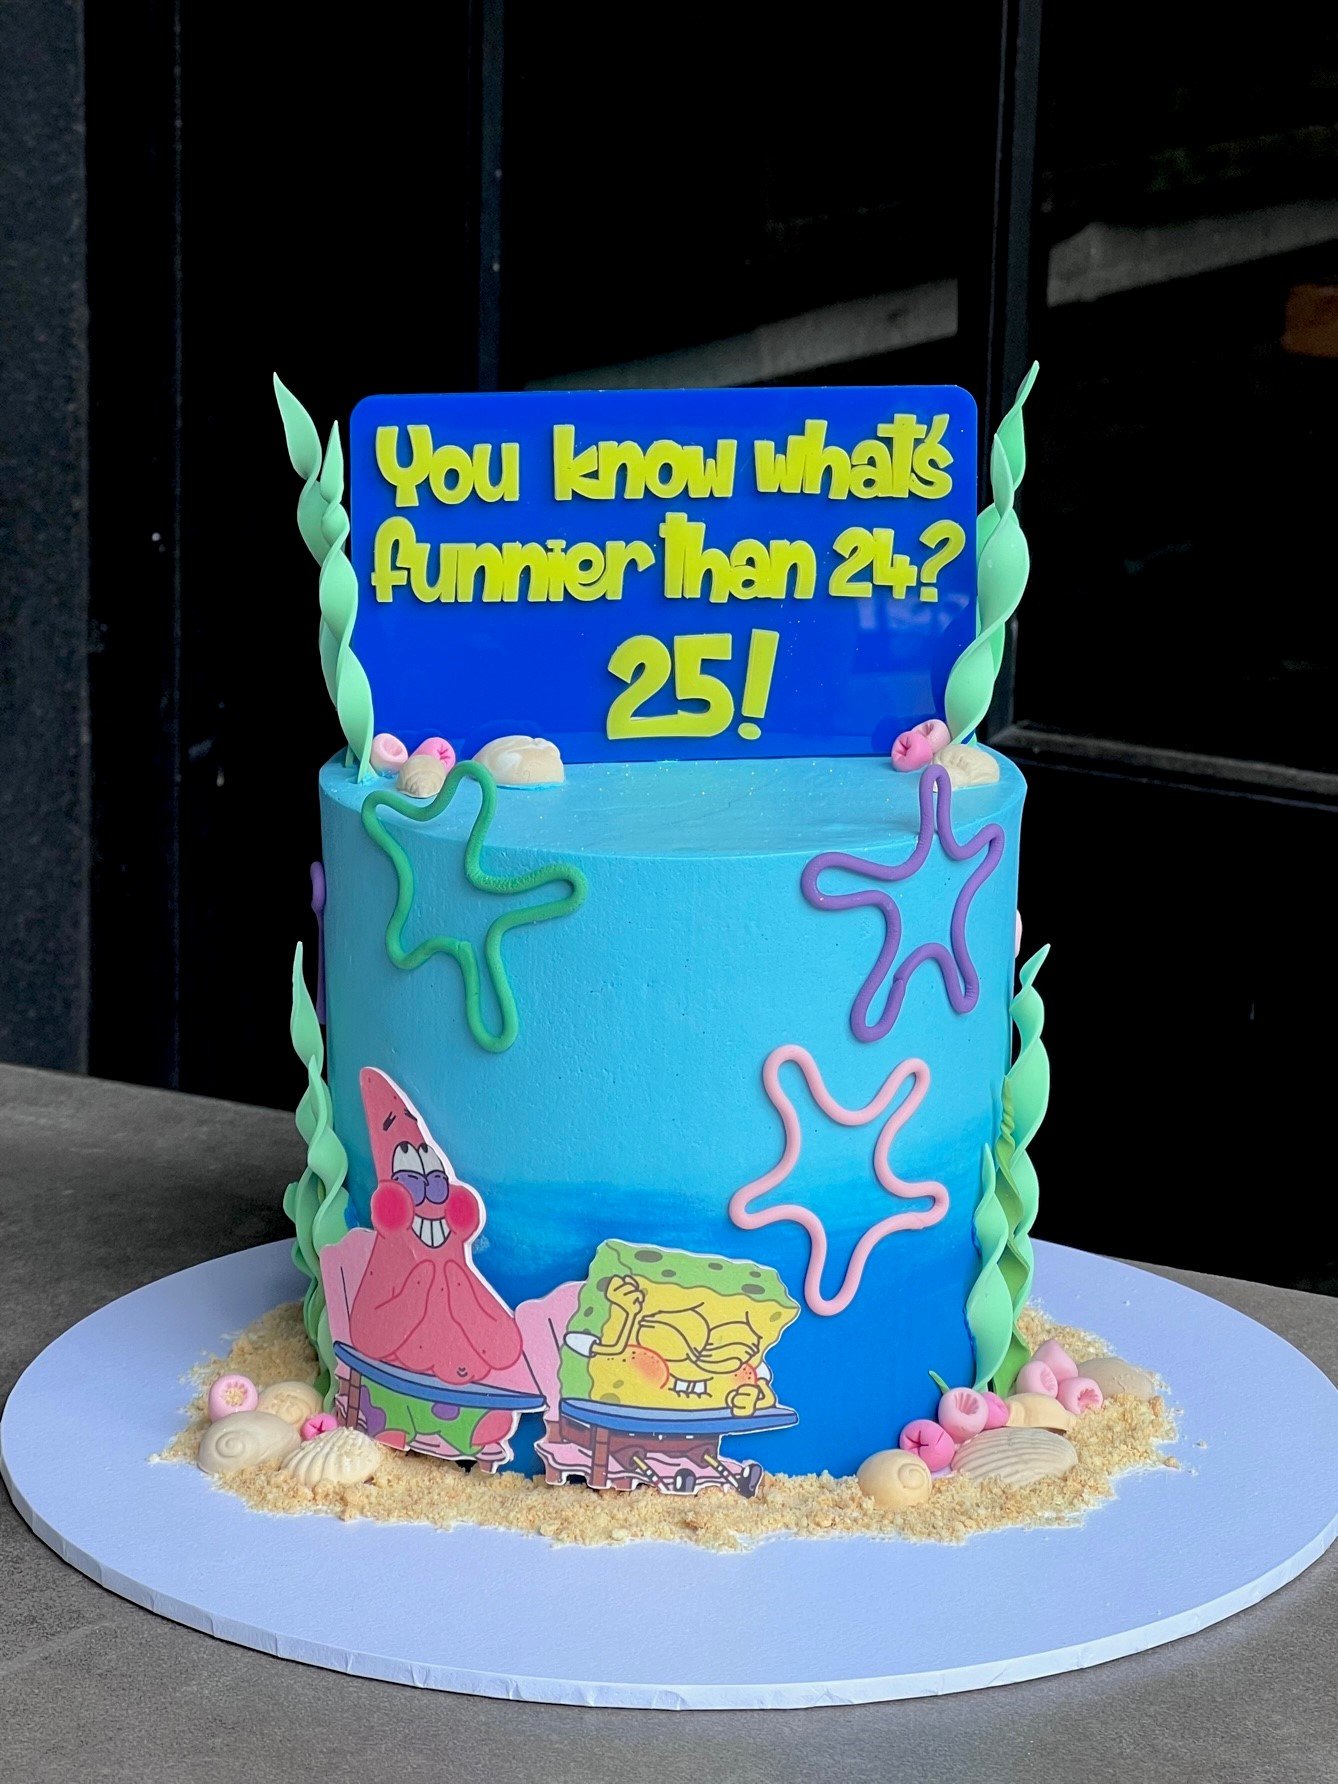 vanillapodspecialtycakes-noveltycakes-brisbanecakes-birthdaycakebrisbane-buttercreamcake (9).jpg